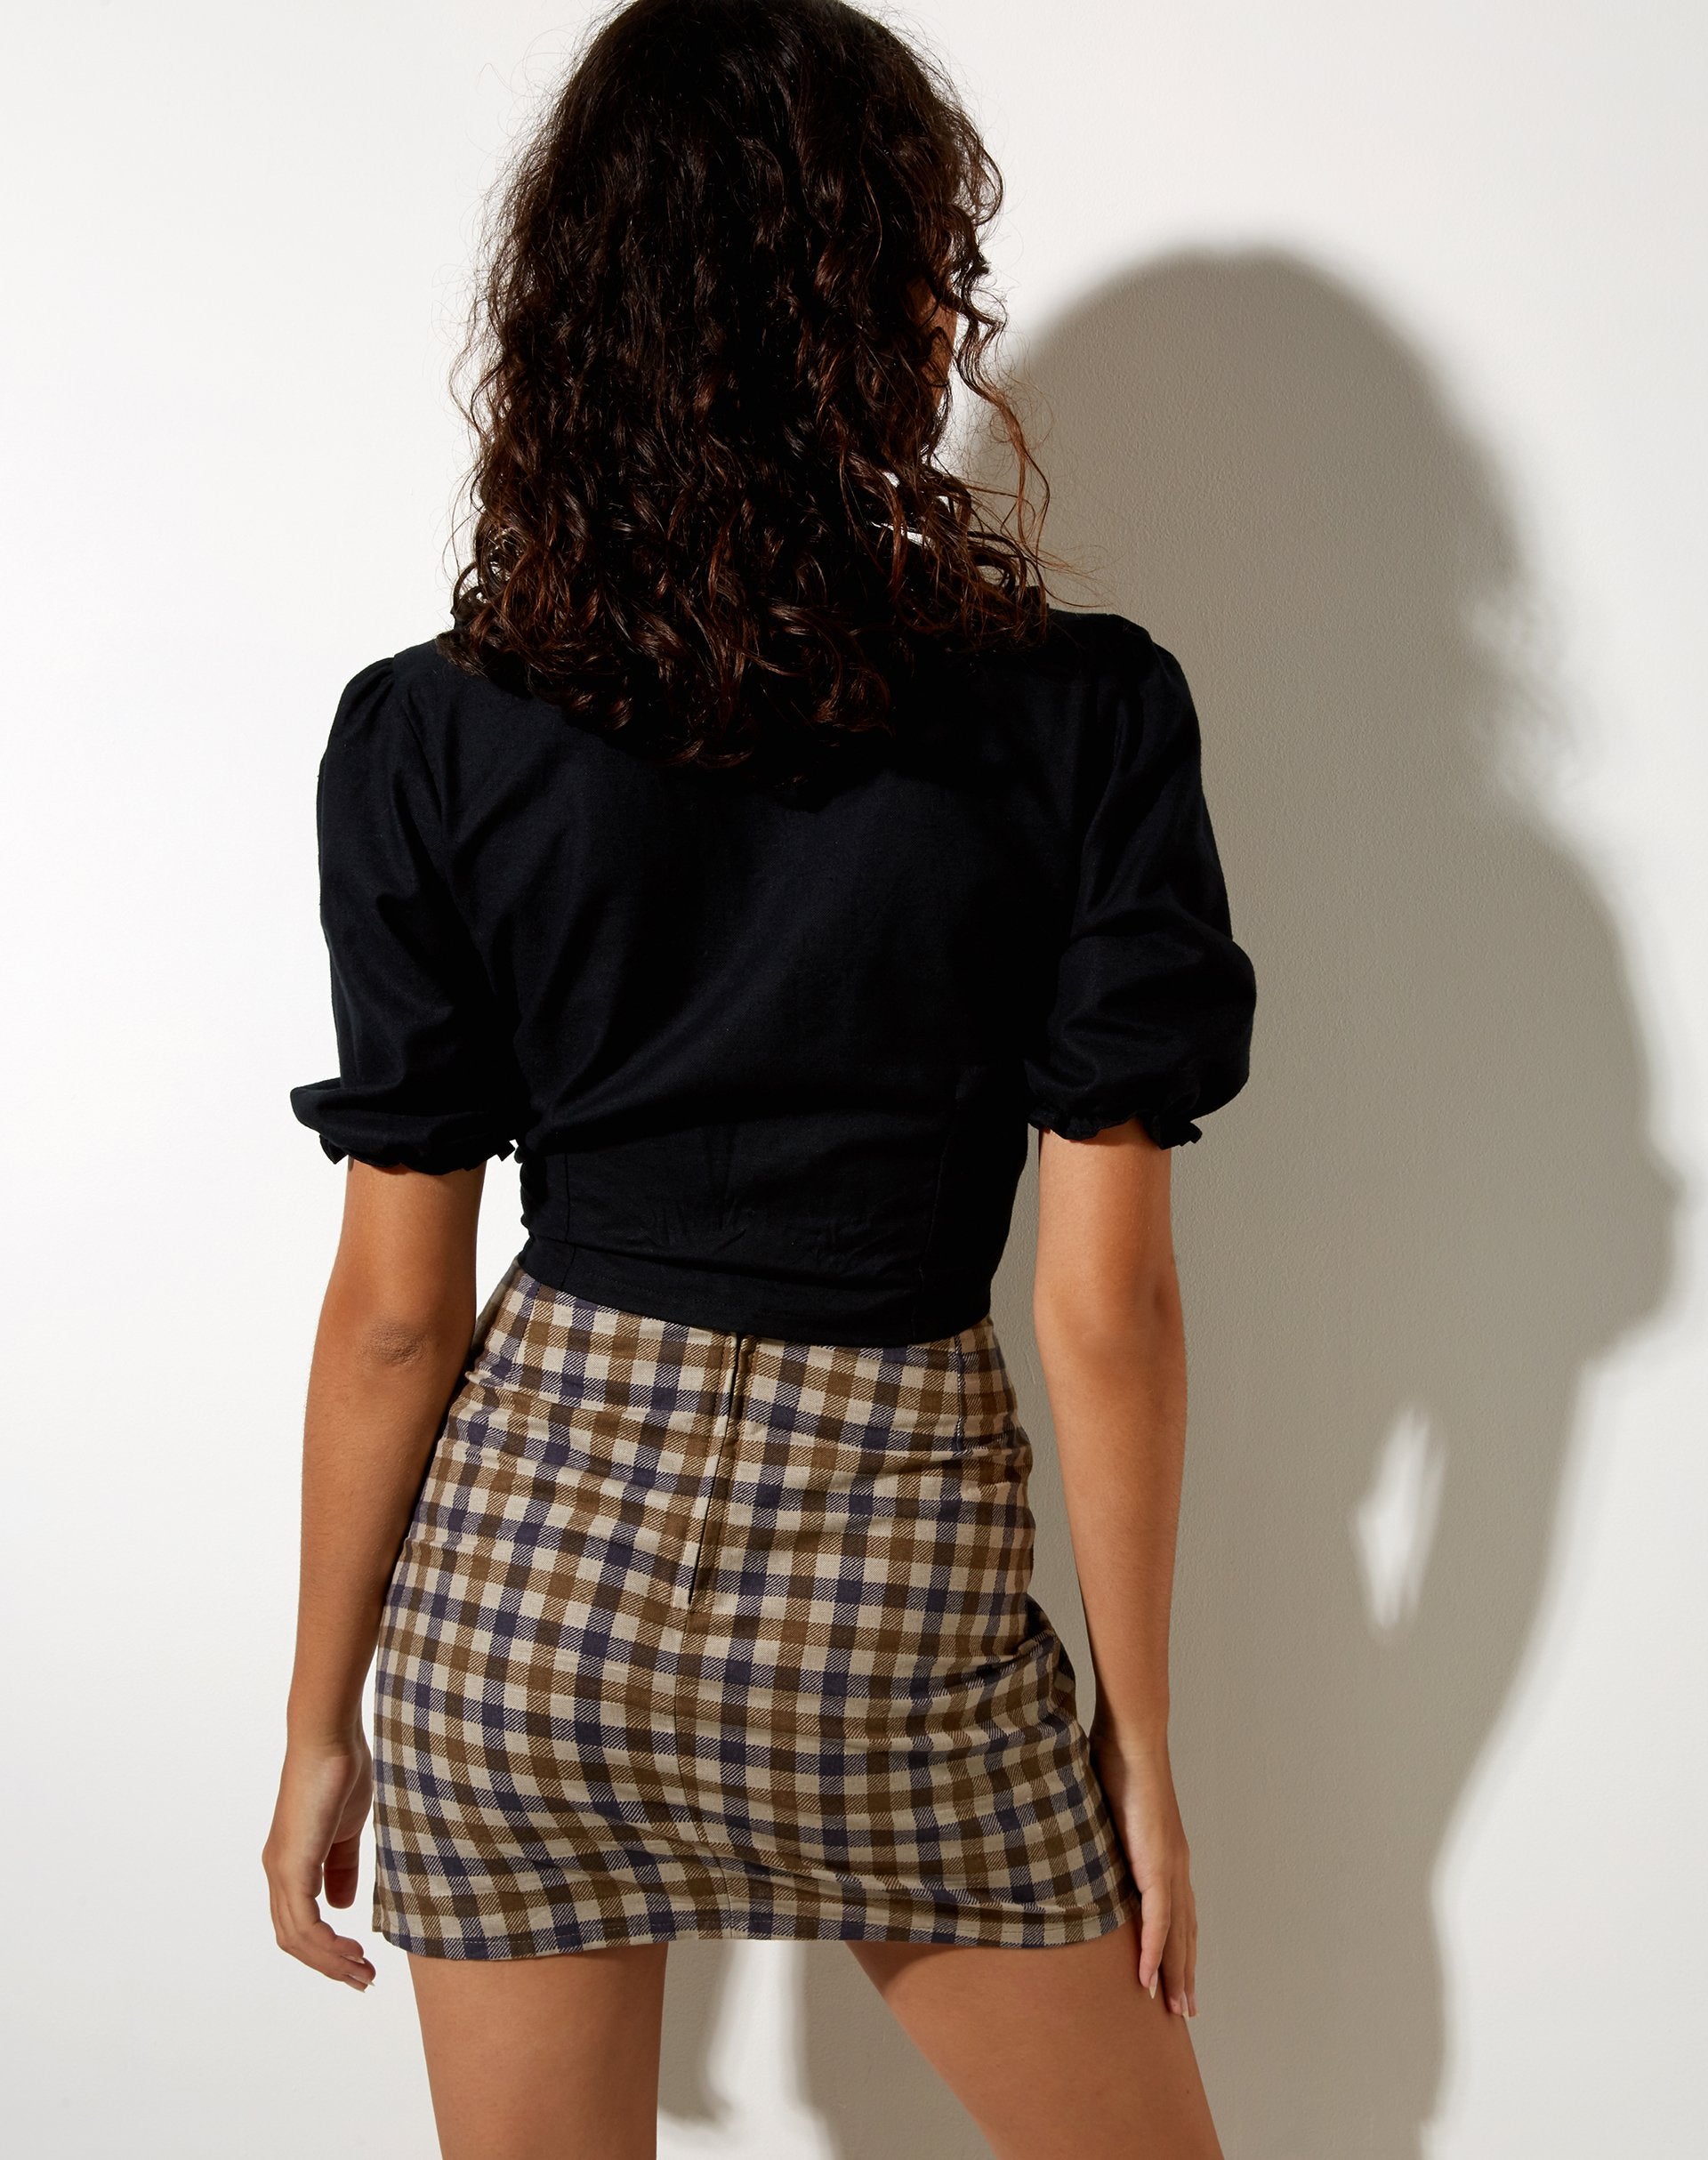 Image of Pelmy Mini Skirt in 40s Check Tan